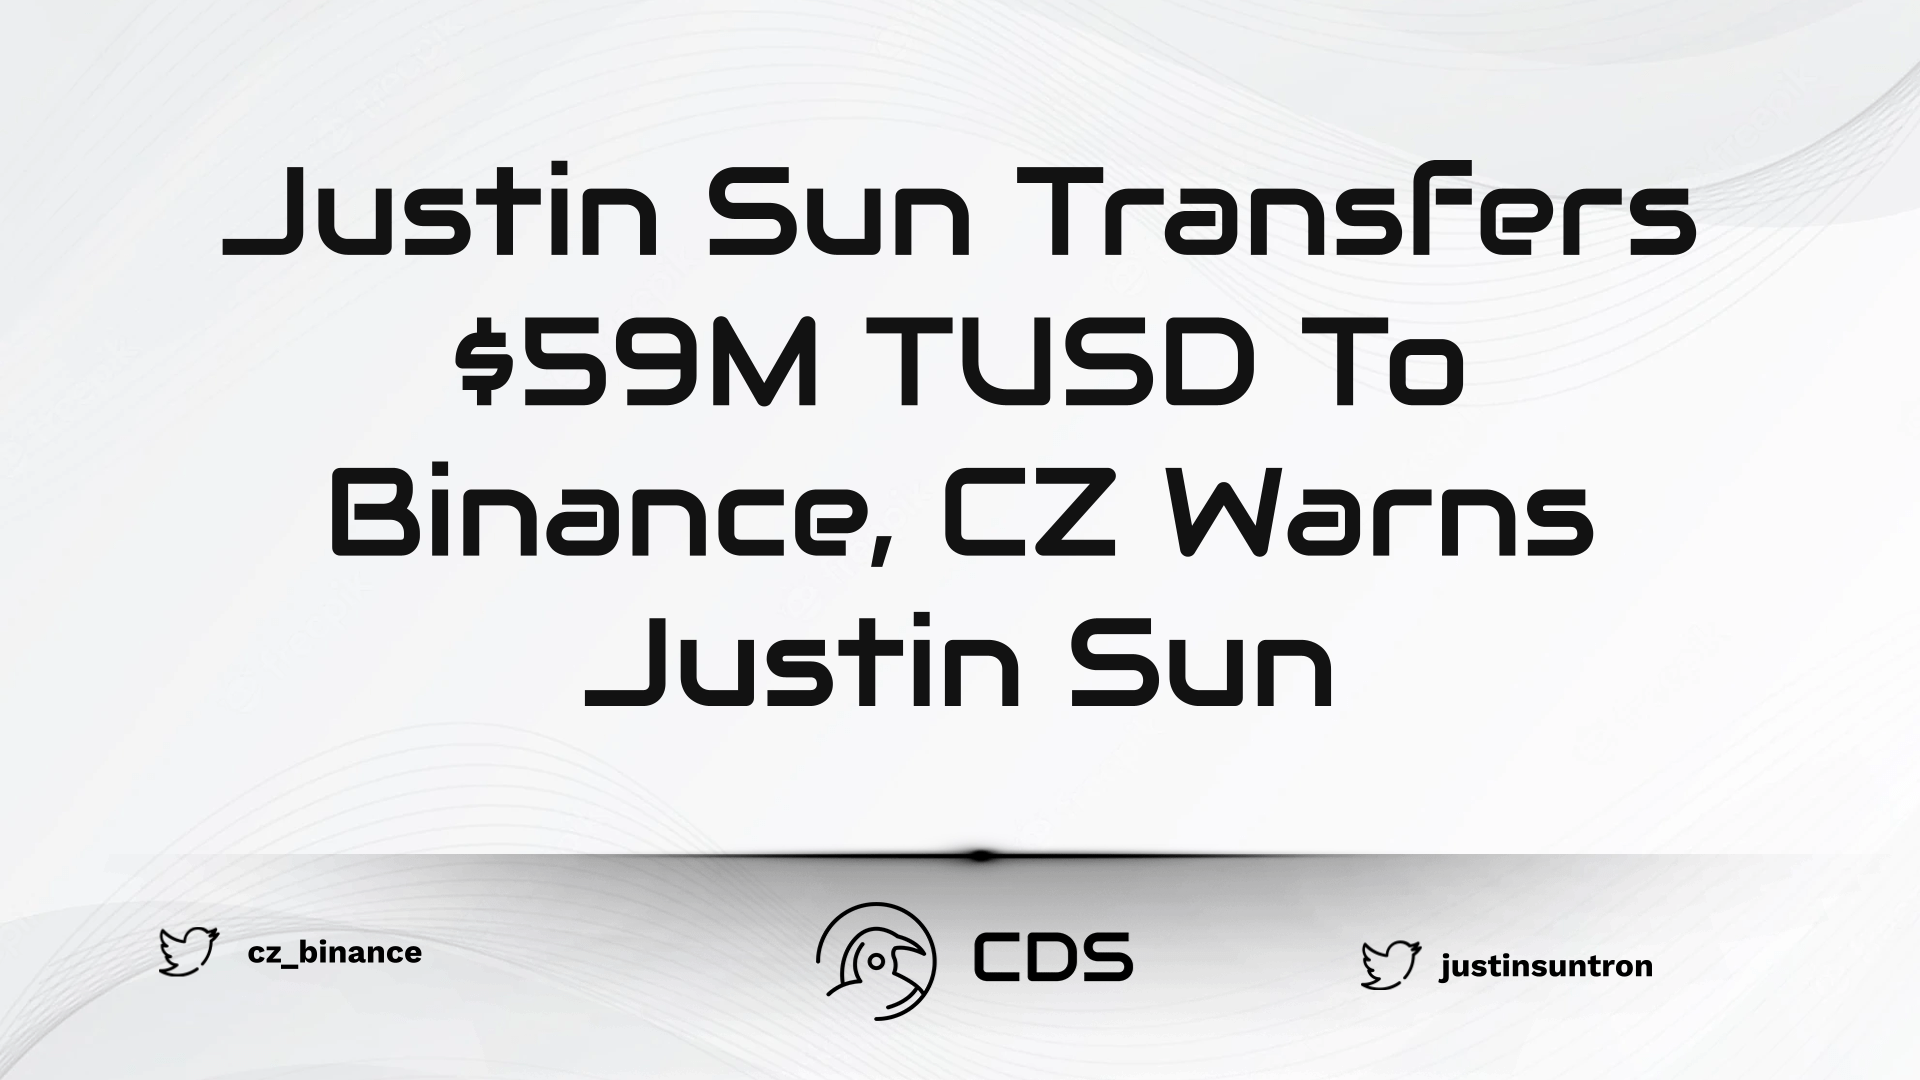 Justin Sun Transfers $59M TUSD To Binance, CZ Warns Justin Sun